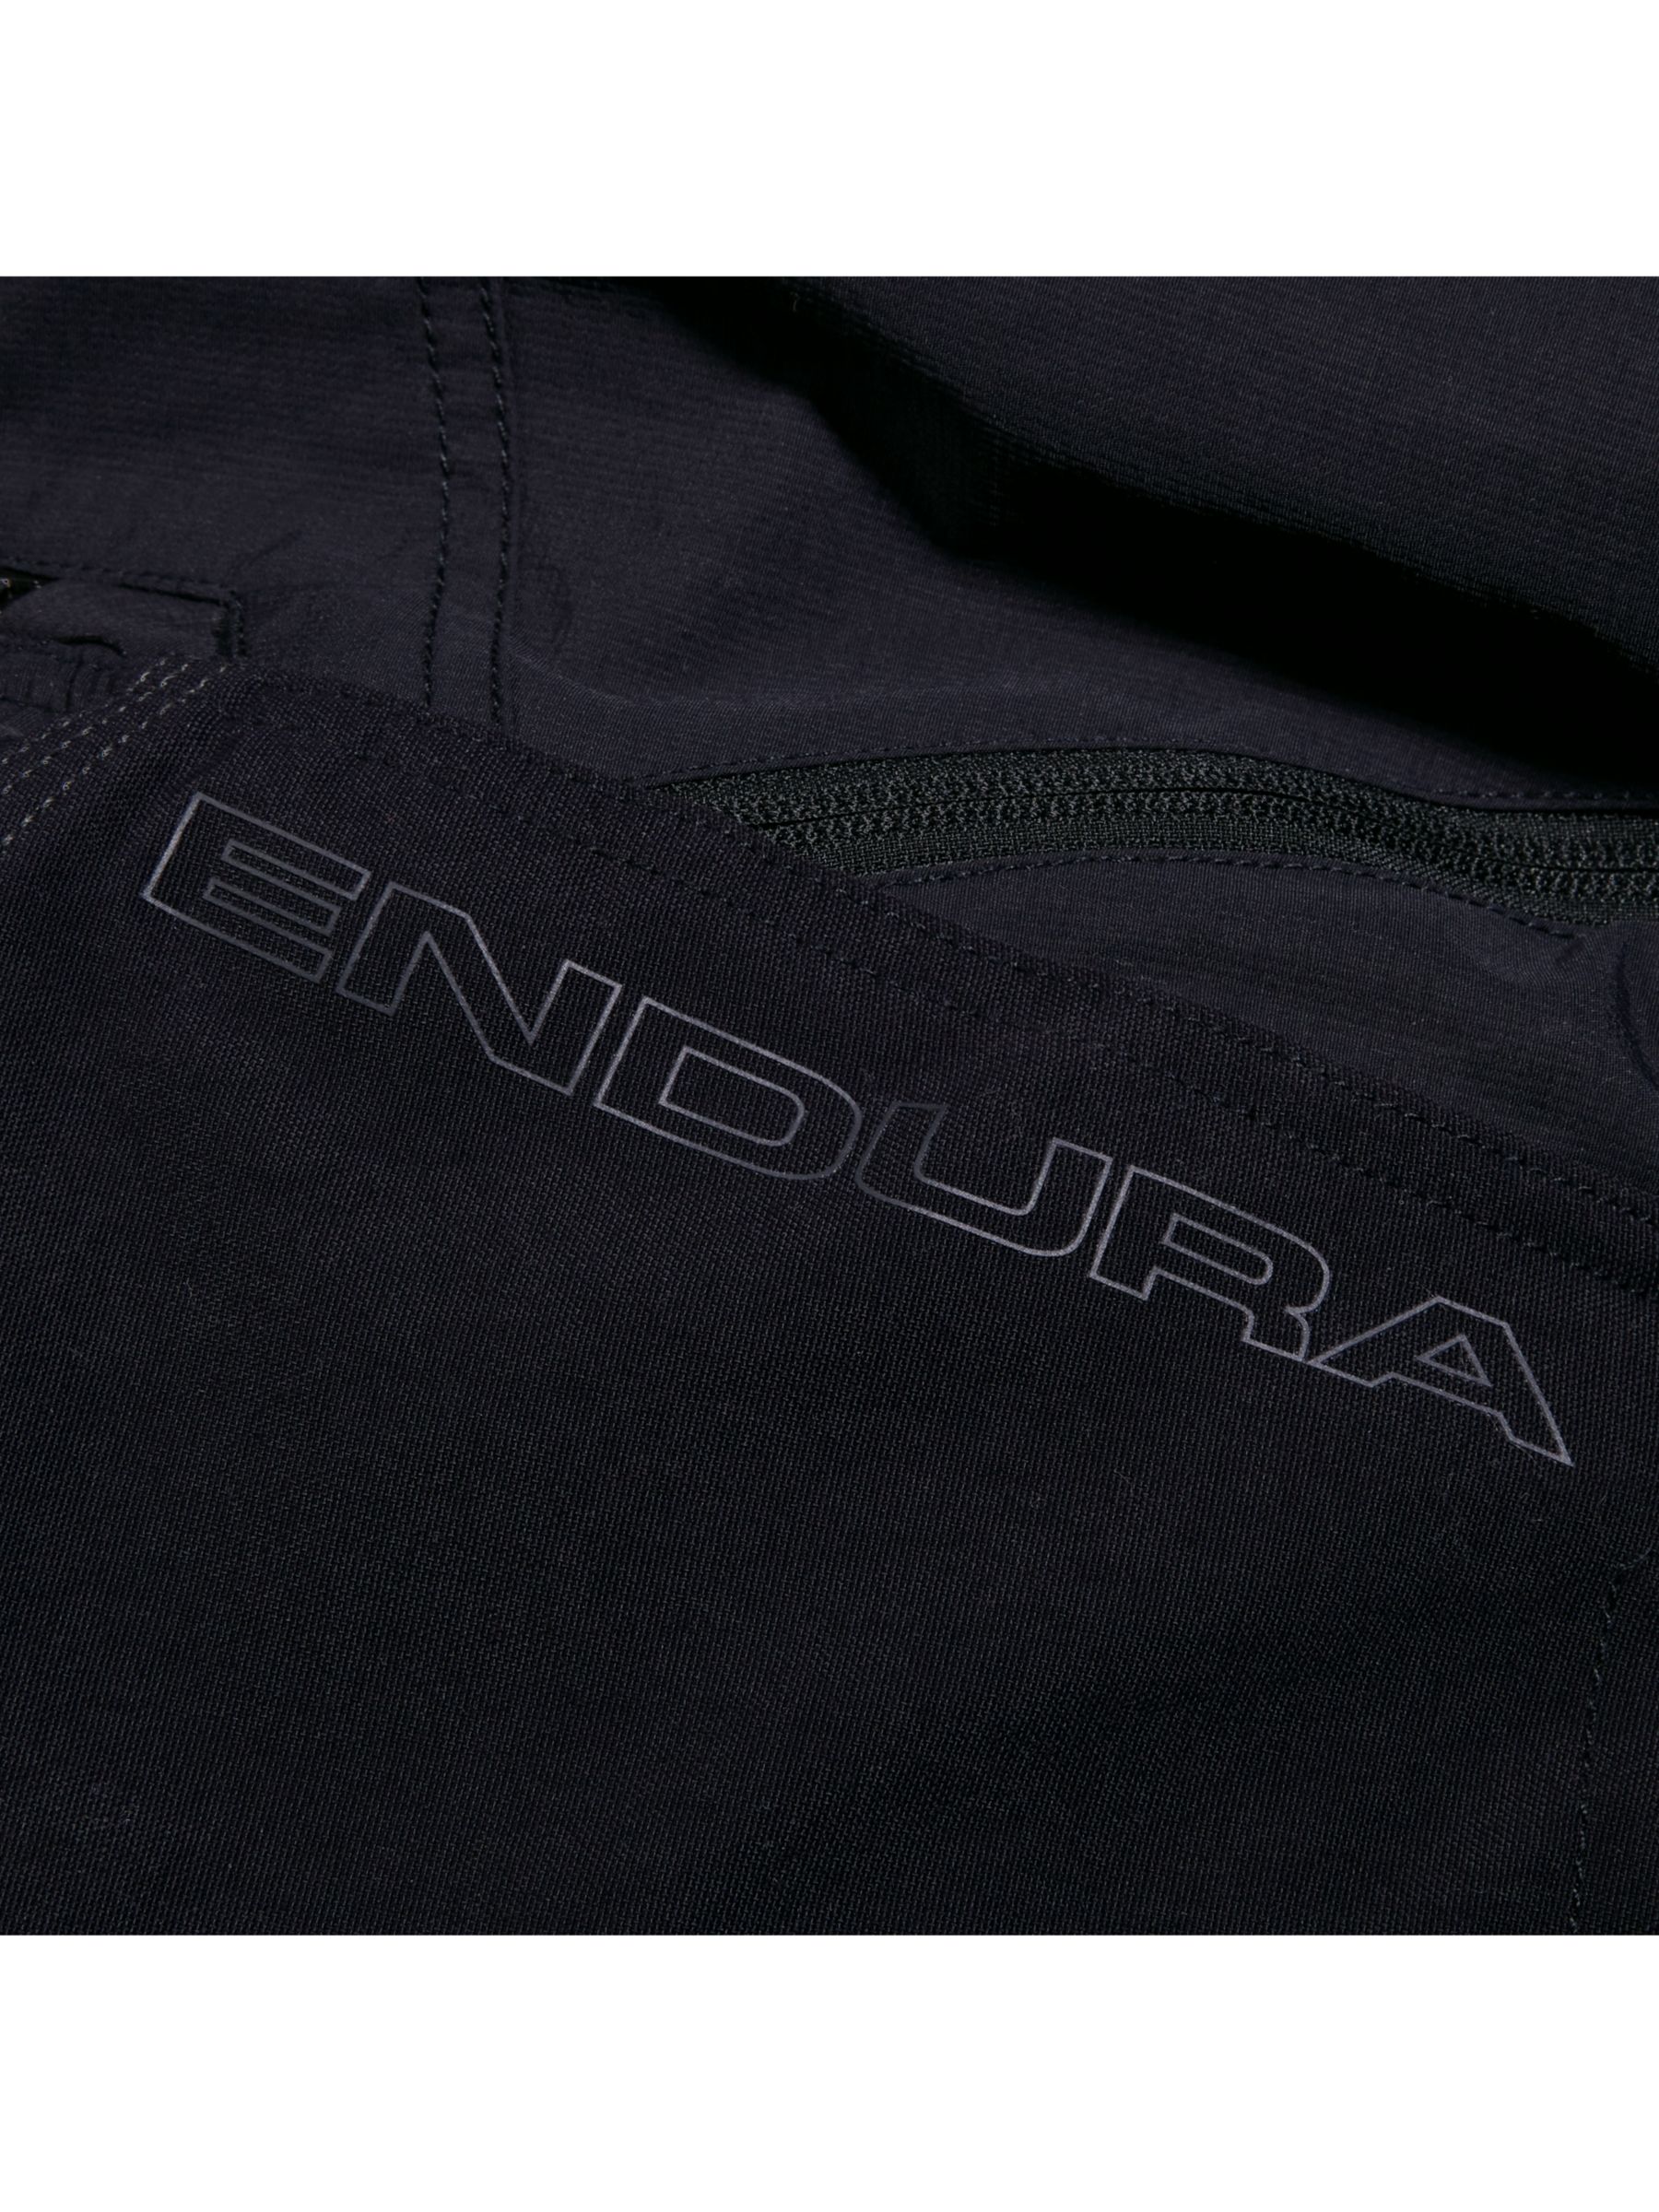 Endura Men's Hummvee Short with Liner, Black, S